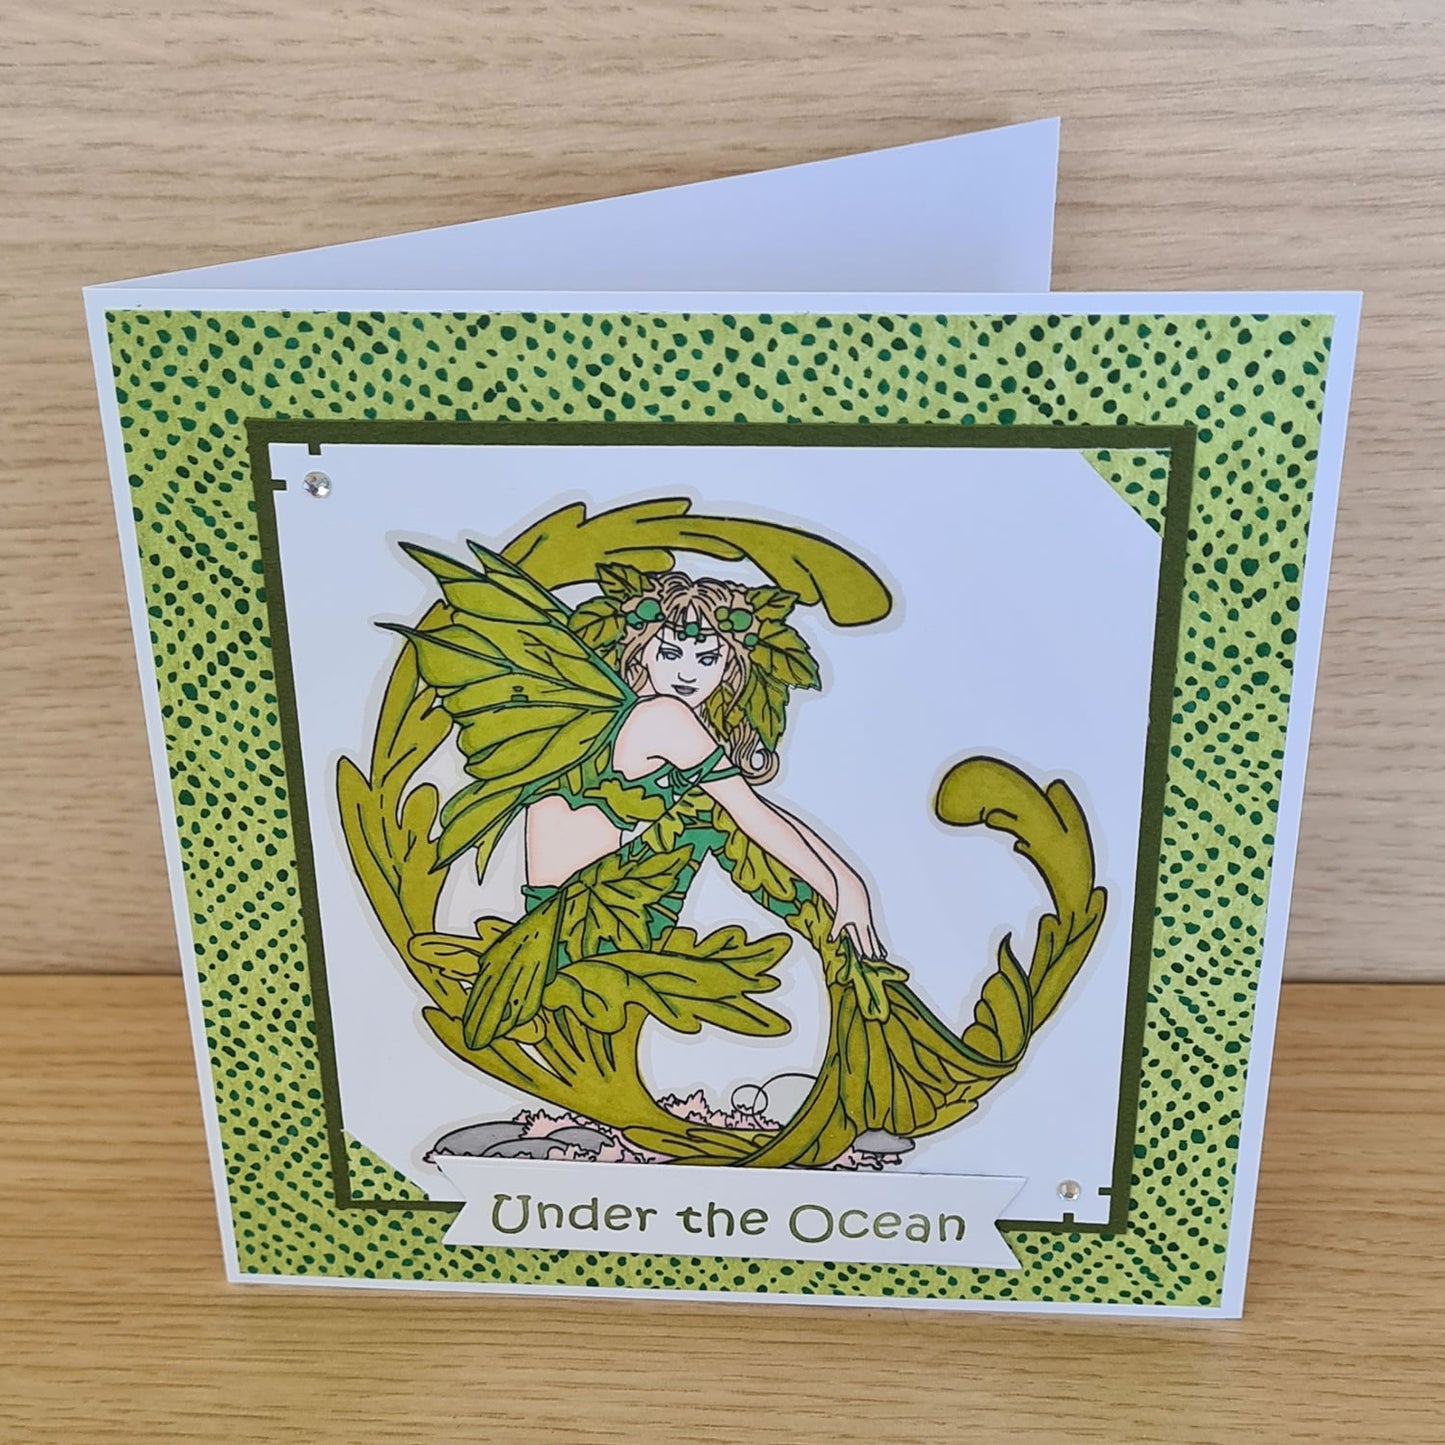 Linda Ravenscroft: Mythical Creatures - Mermaids Stamps